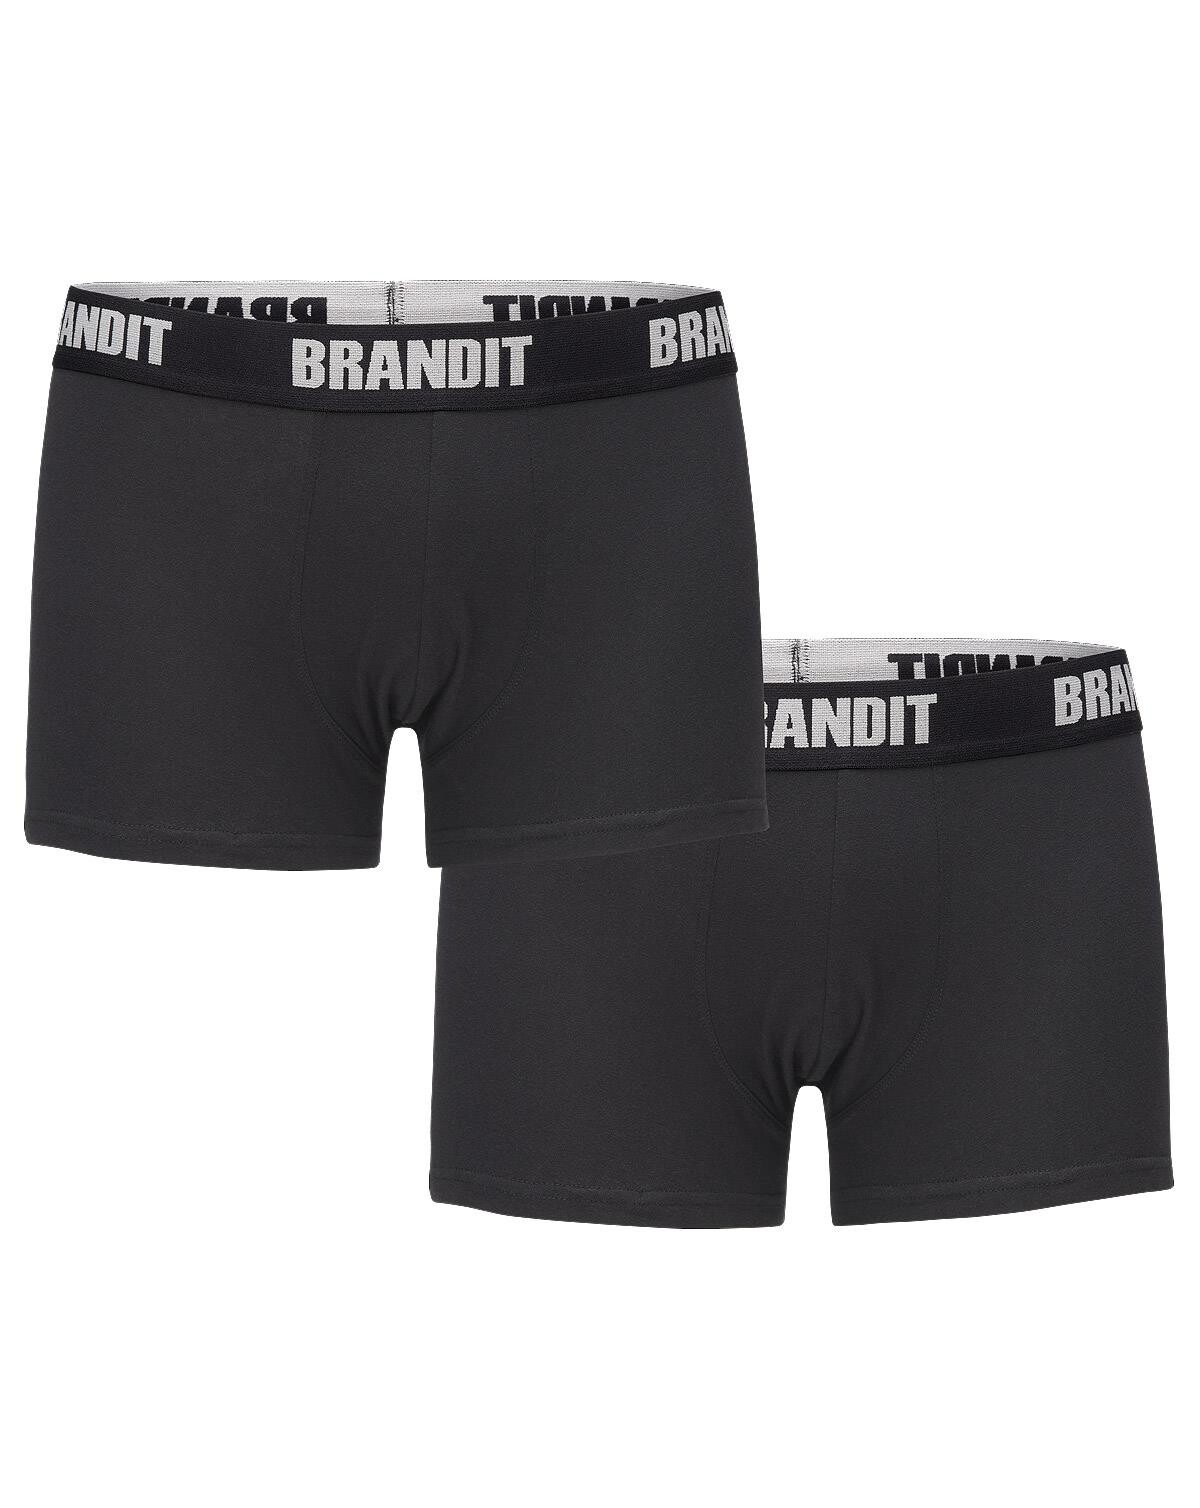 Brandit Boxershorts Logo 2er Pack (Sort, 2XL)